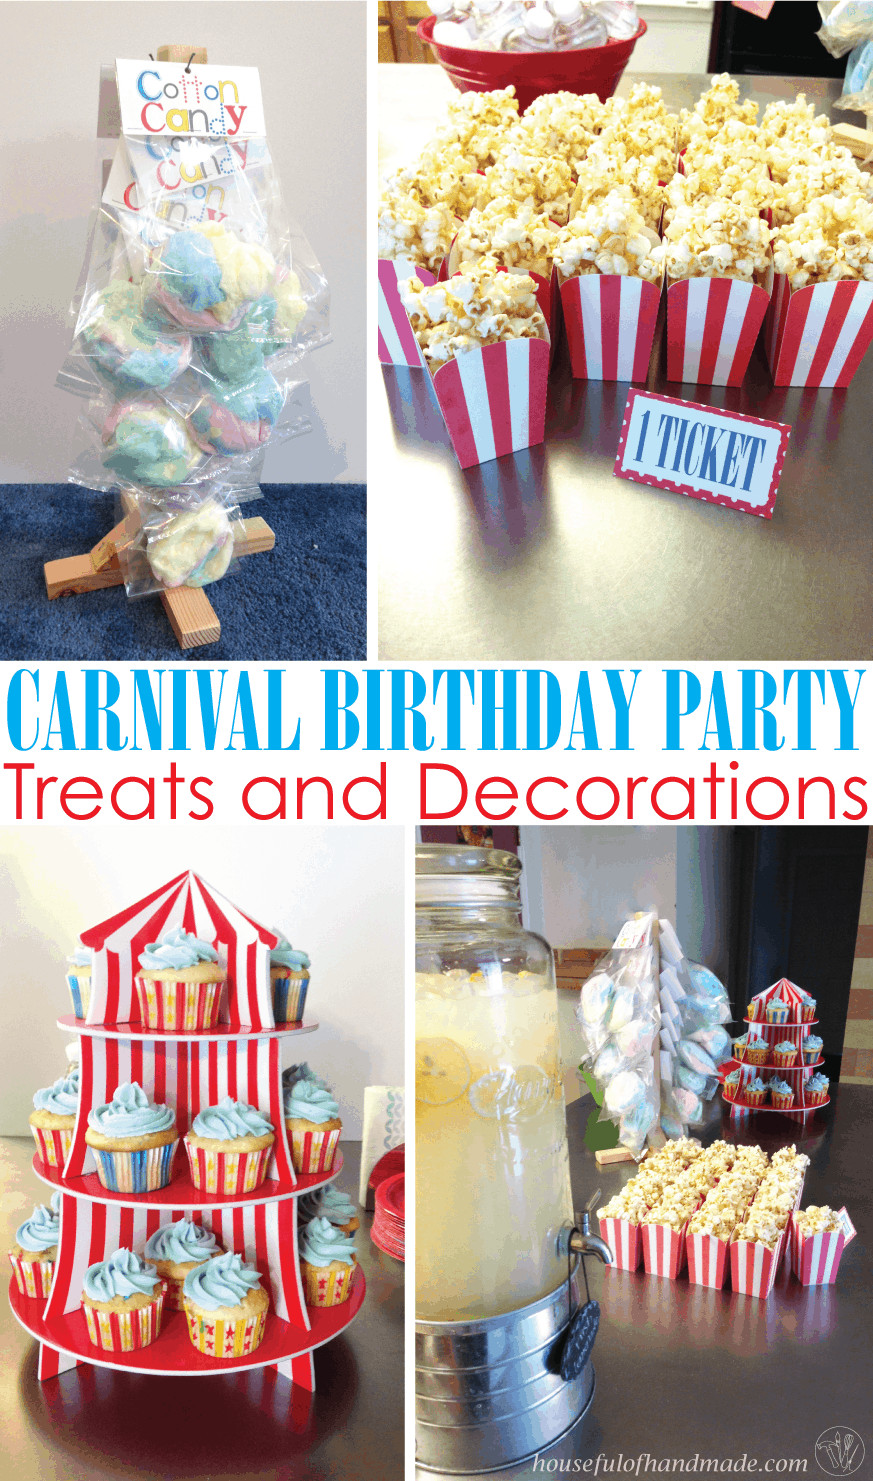 Carnival Themed Birthday Party Ideas
 Carnival Birthday Party Part 2 Treats & Decorations